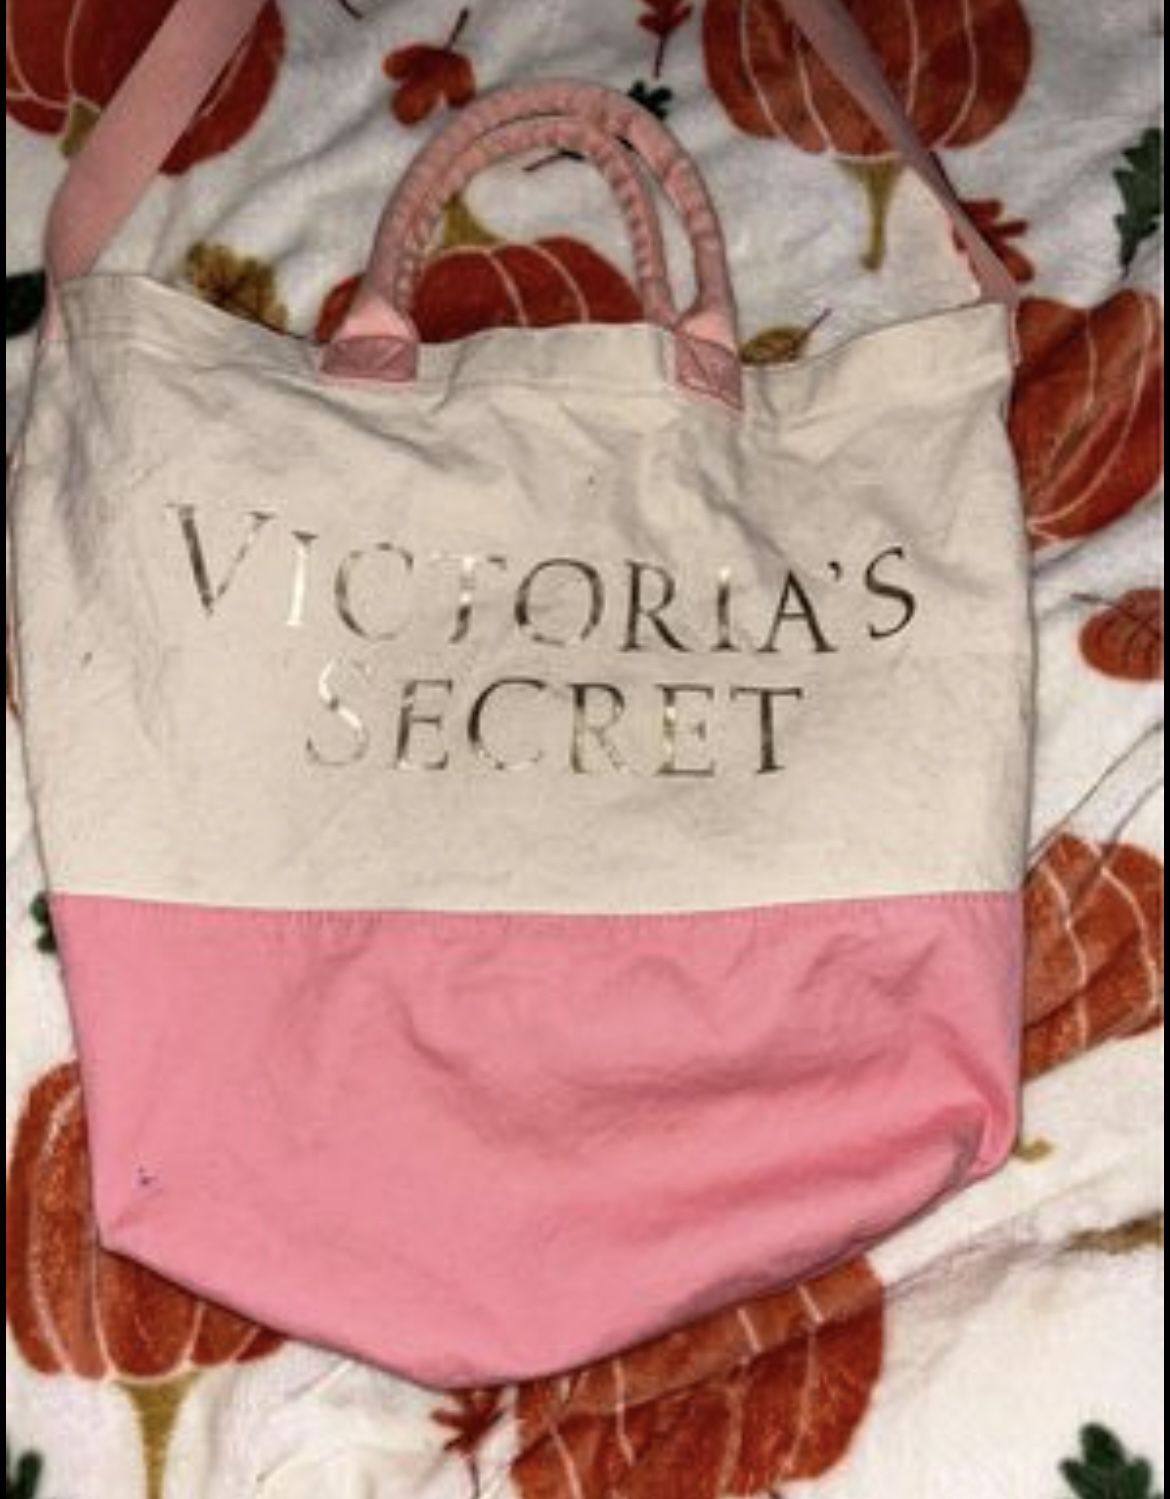 Victoria’s Secret tote bag